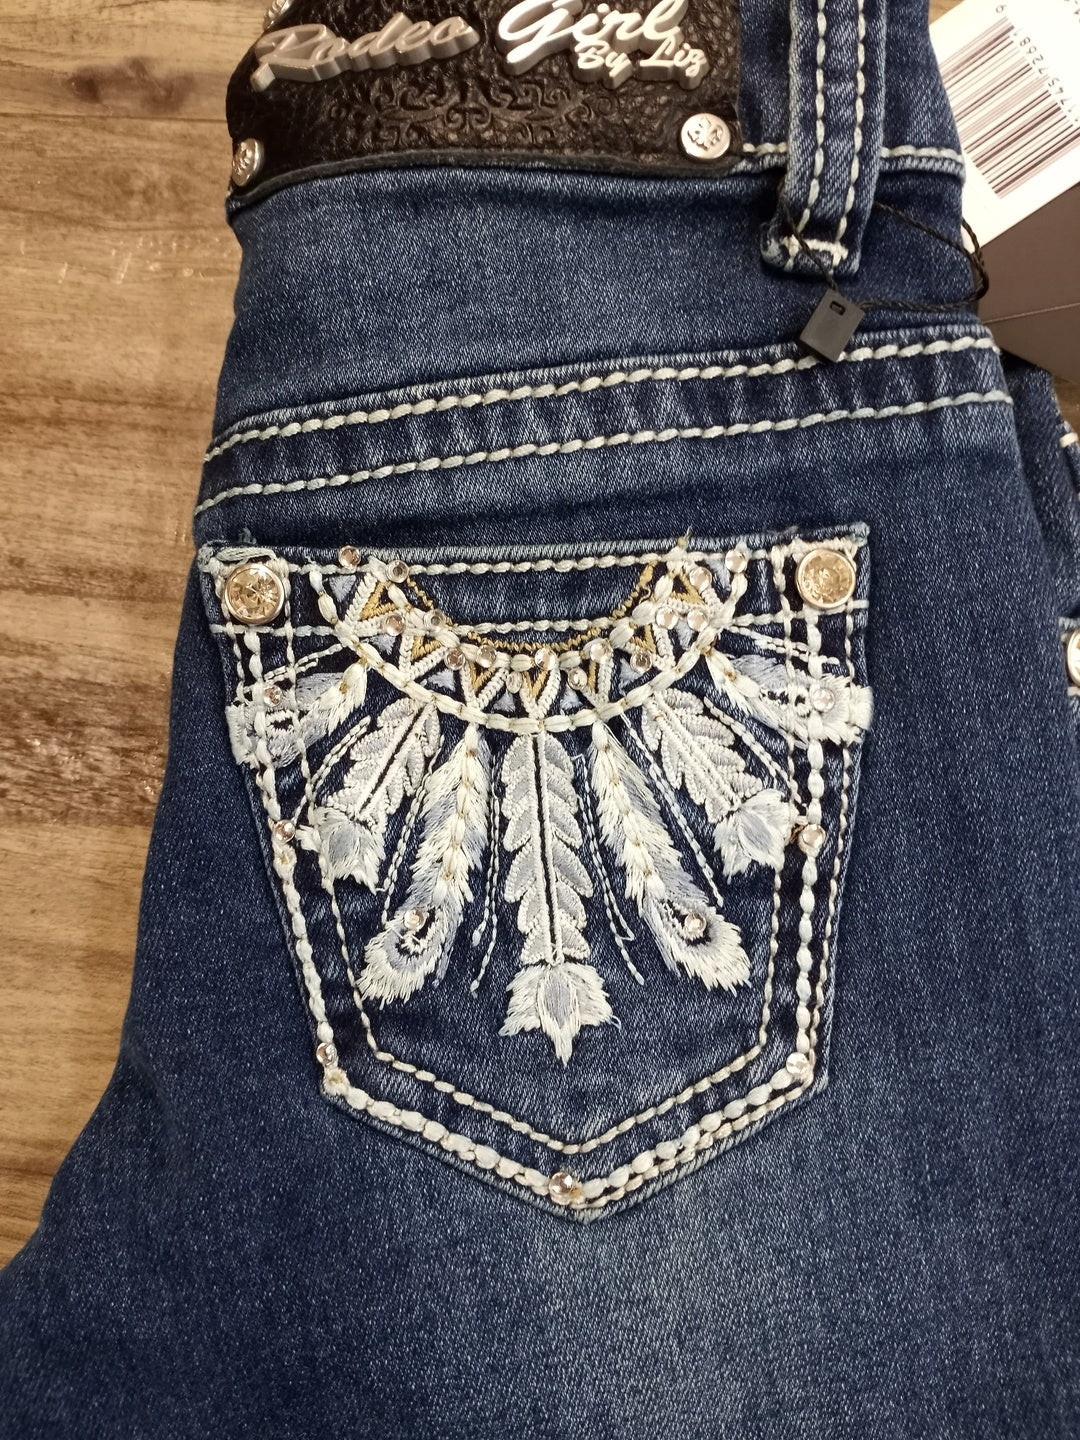 Rodeo Girl Jeans W/Embrd Pockets GJ-2115